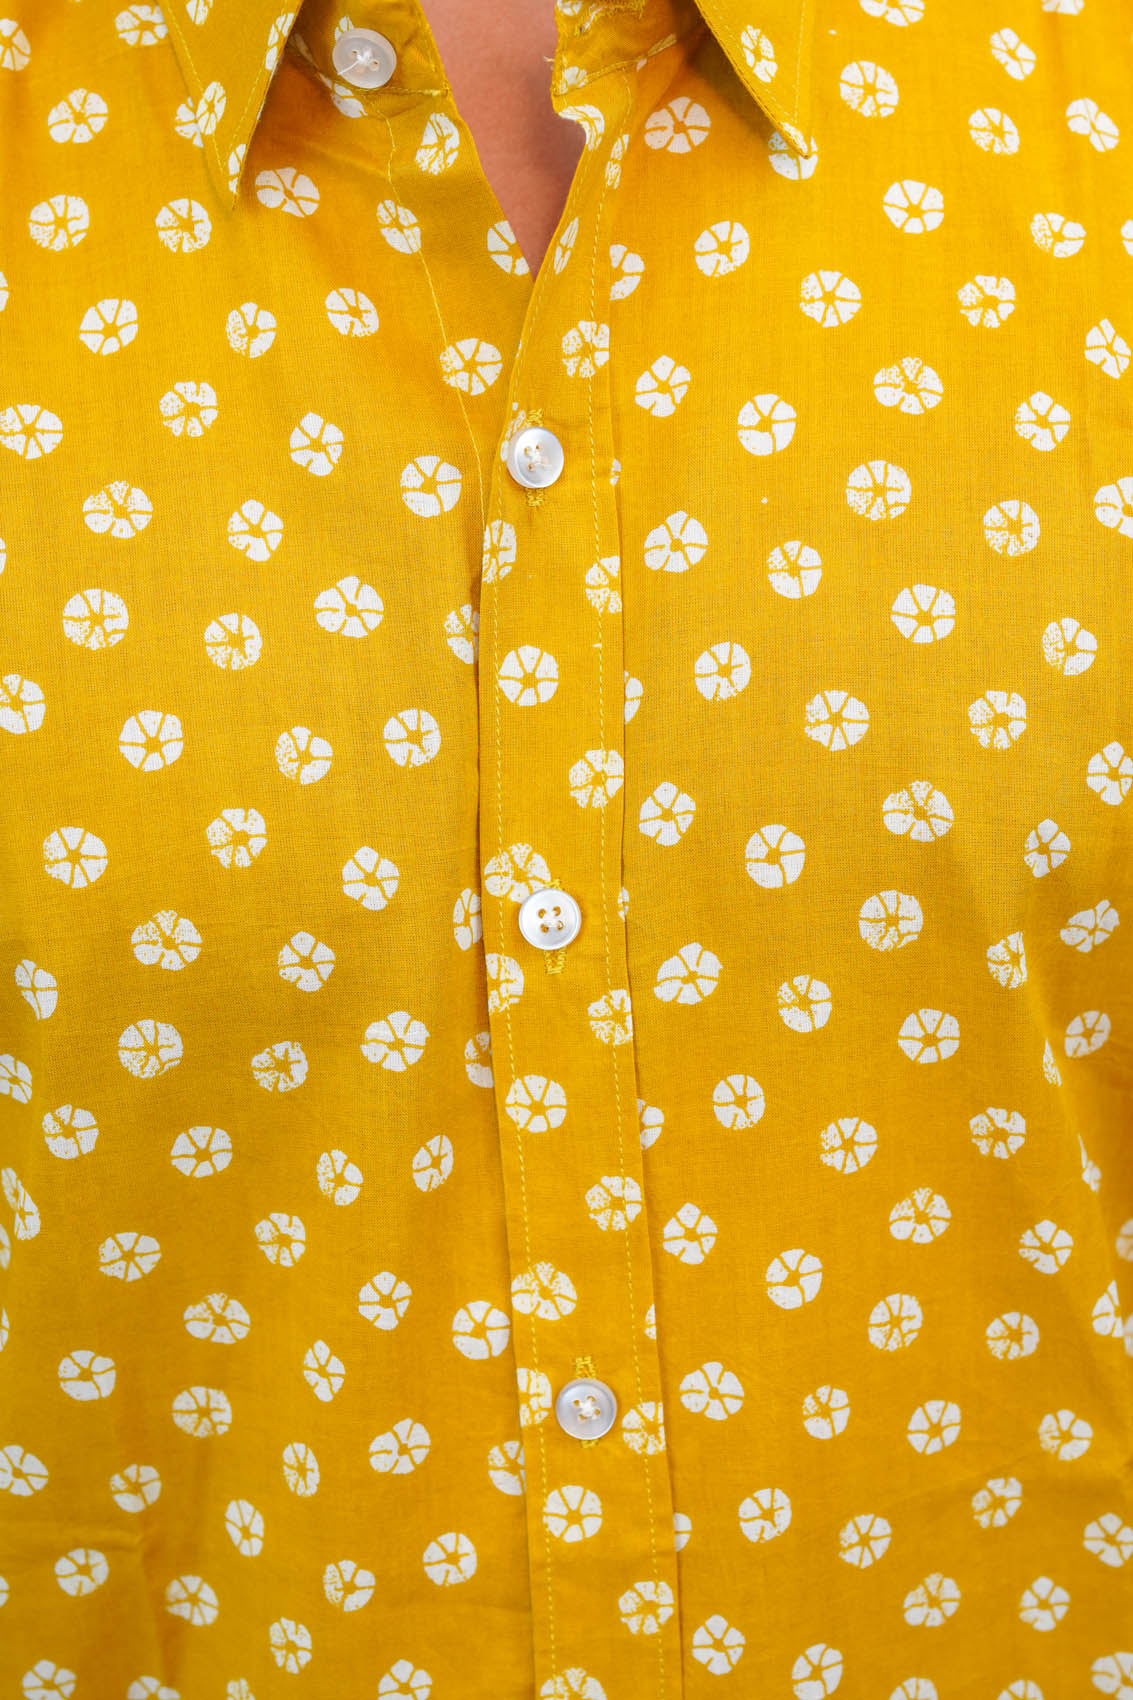 Yellow Half Shirt with White Flowers